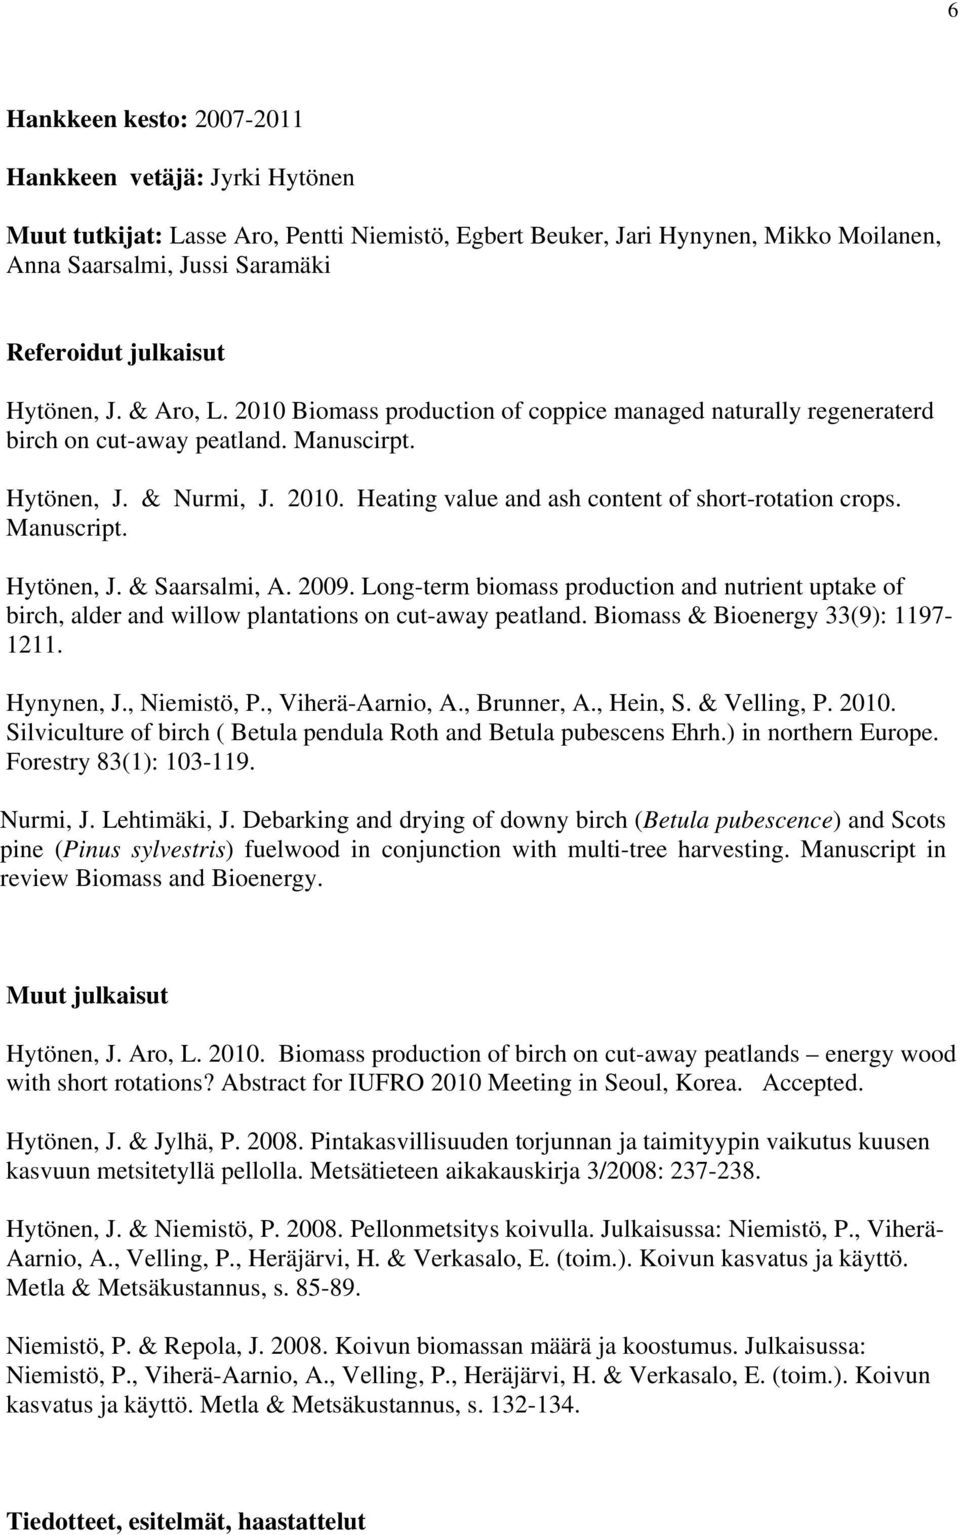 Manuscript. Hytönen, J. & Saarsalmi, A. 2009. Long-term biomass production and nutrient uptake of birch, alder and willow plantations on cut-away peatland. Biomass & Bioenergy 33(9): 1197-1211.